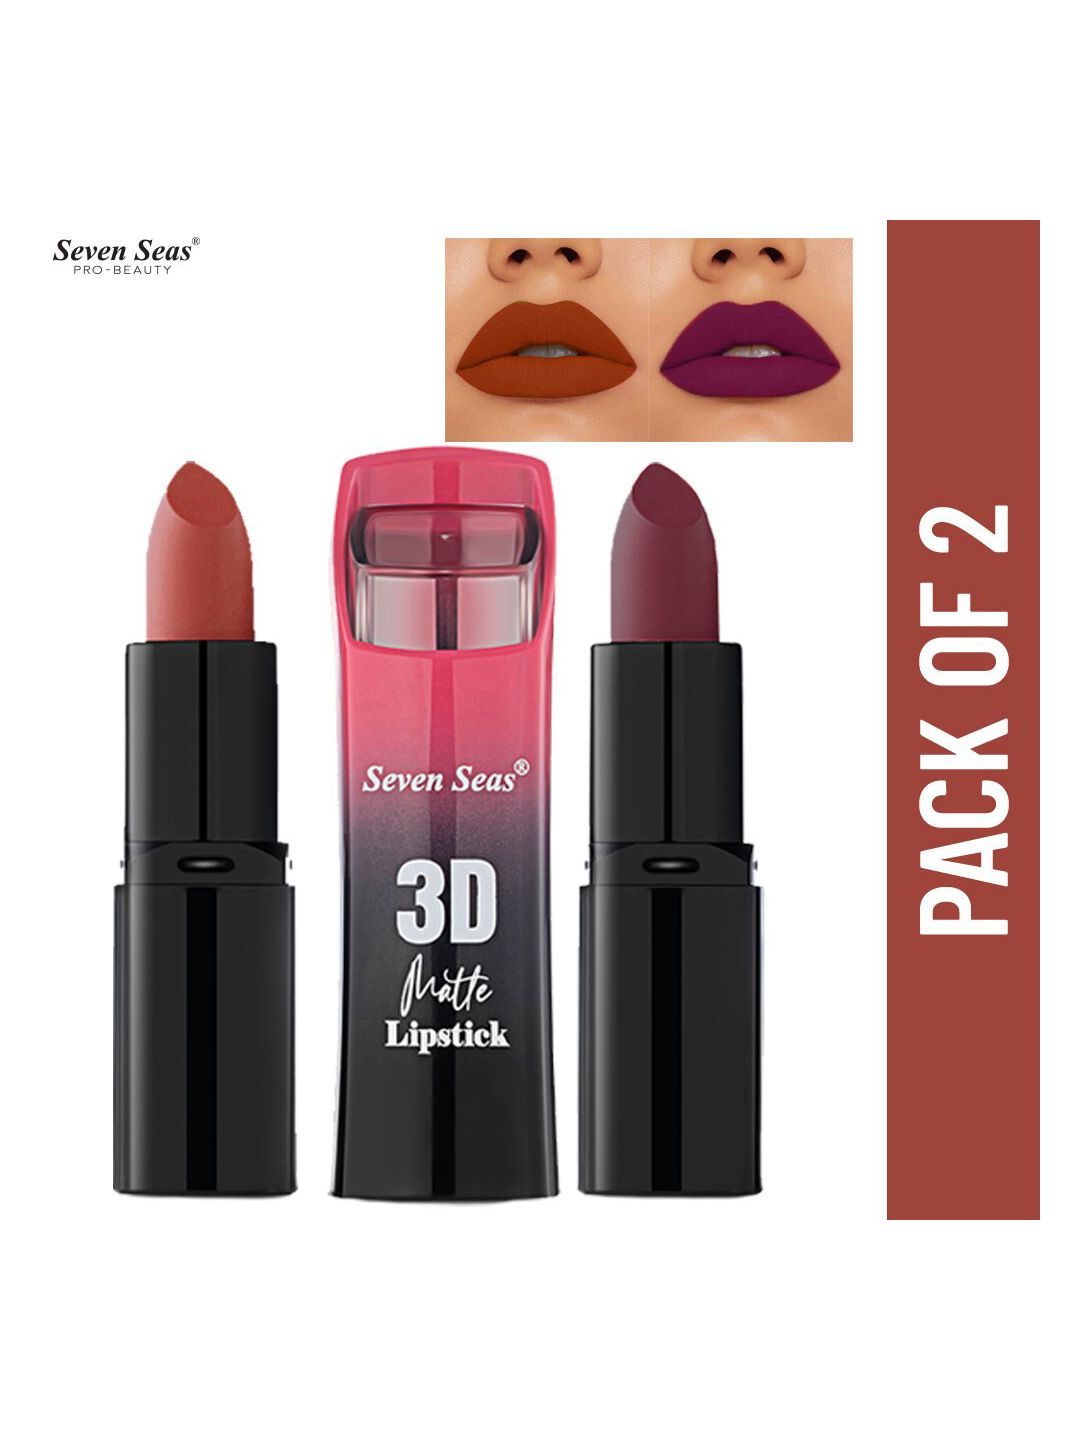 Seven Seas Set of 2 Full Coverage 3D Matte Lipstick - Rose 2-303 & Chestnut Rose 2-305 Price in India